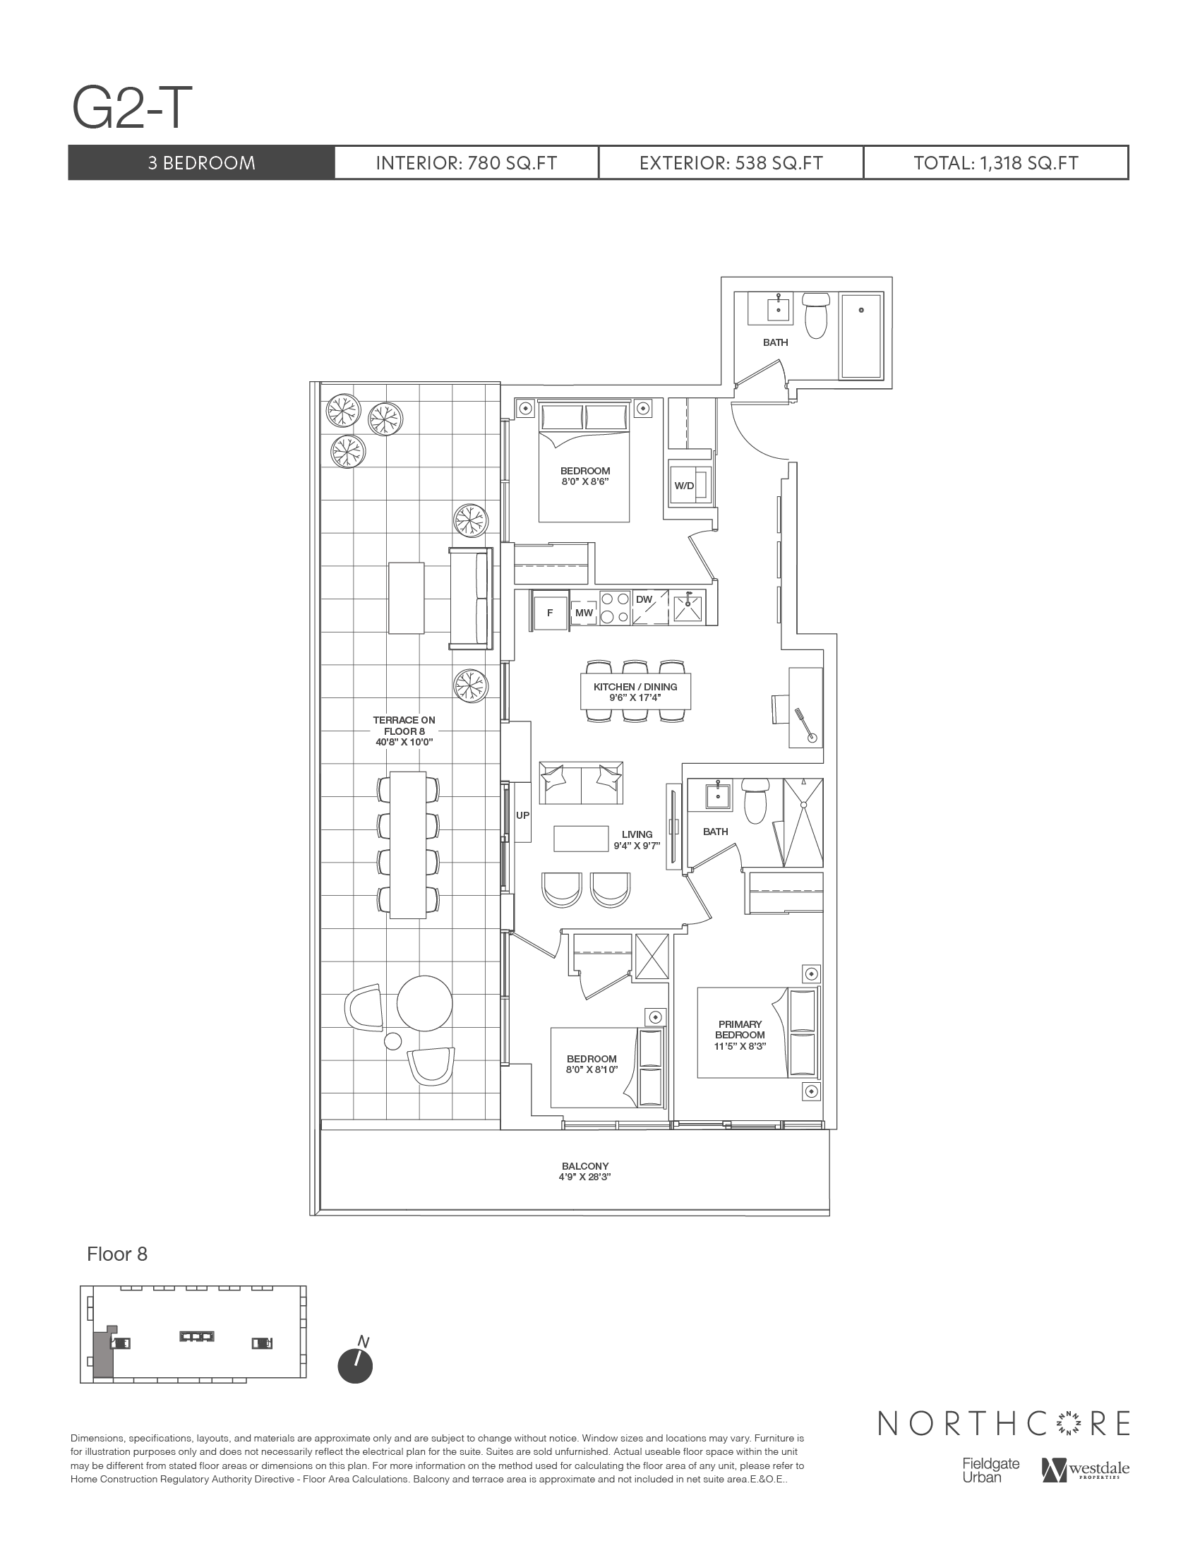 G2-T floorplan